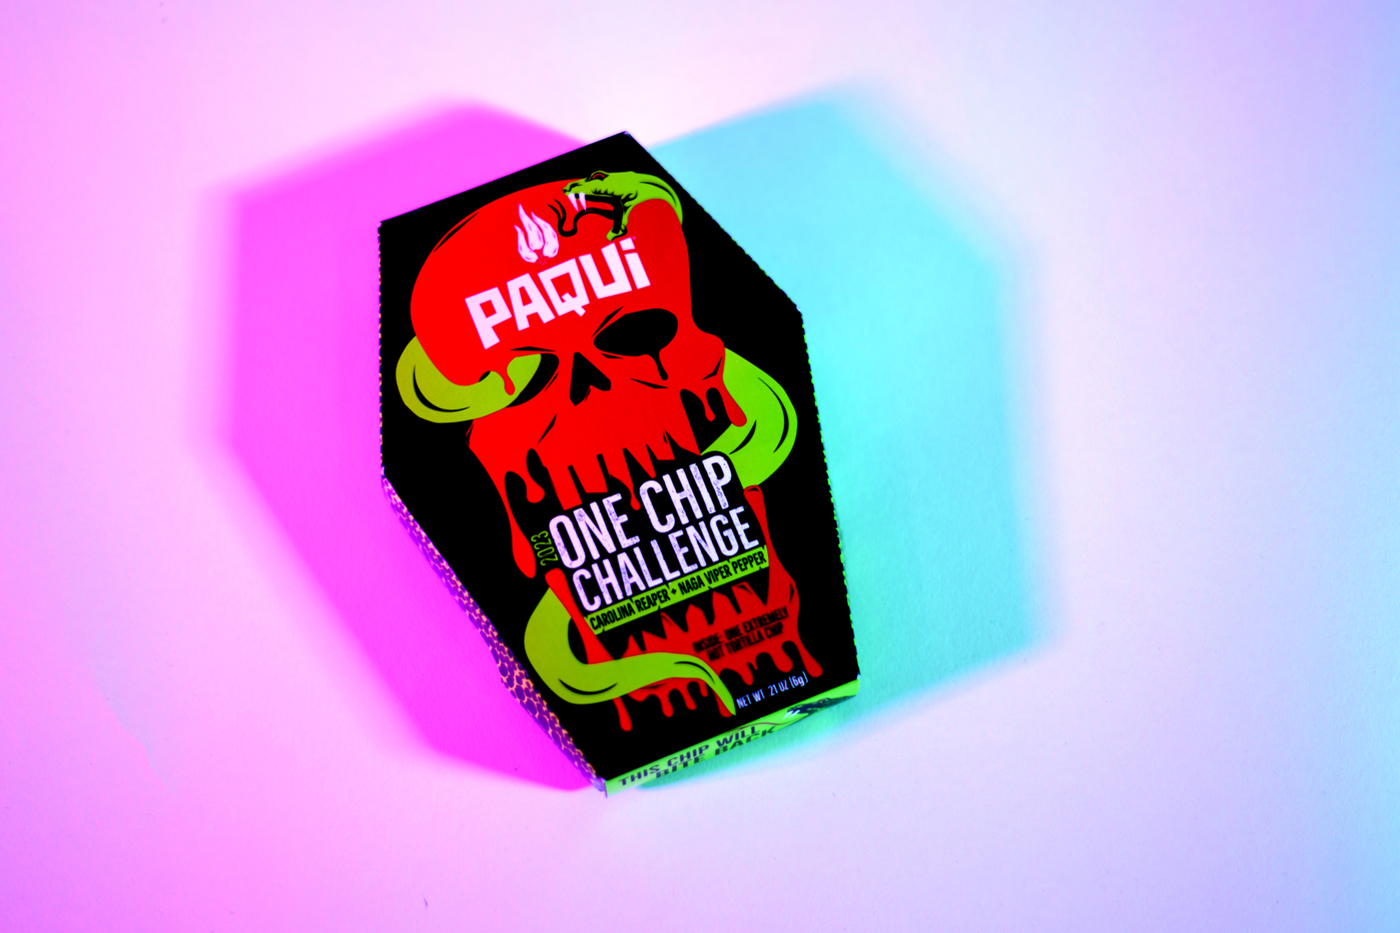 Calling All Casper Daredevils: Take on the Paqui 1-Chip Challenge